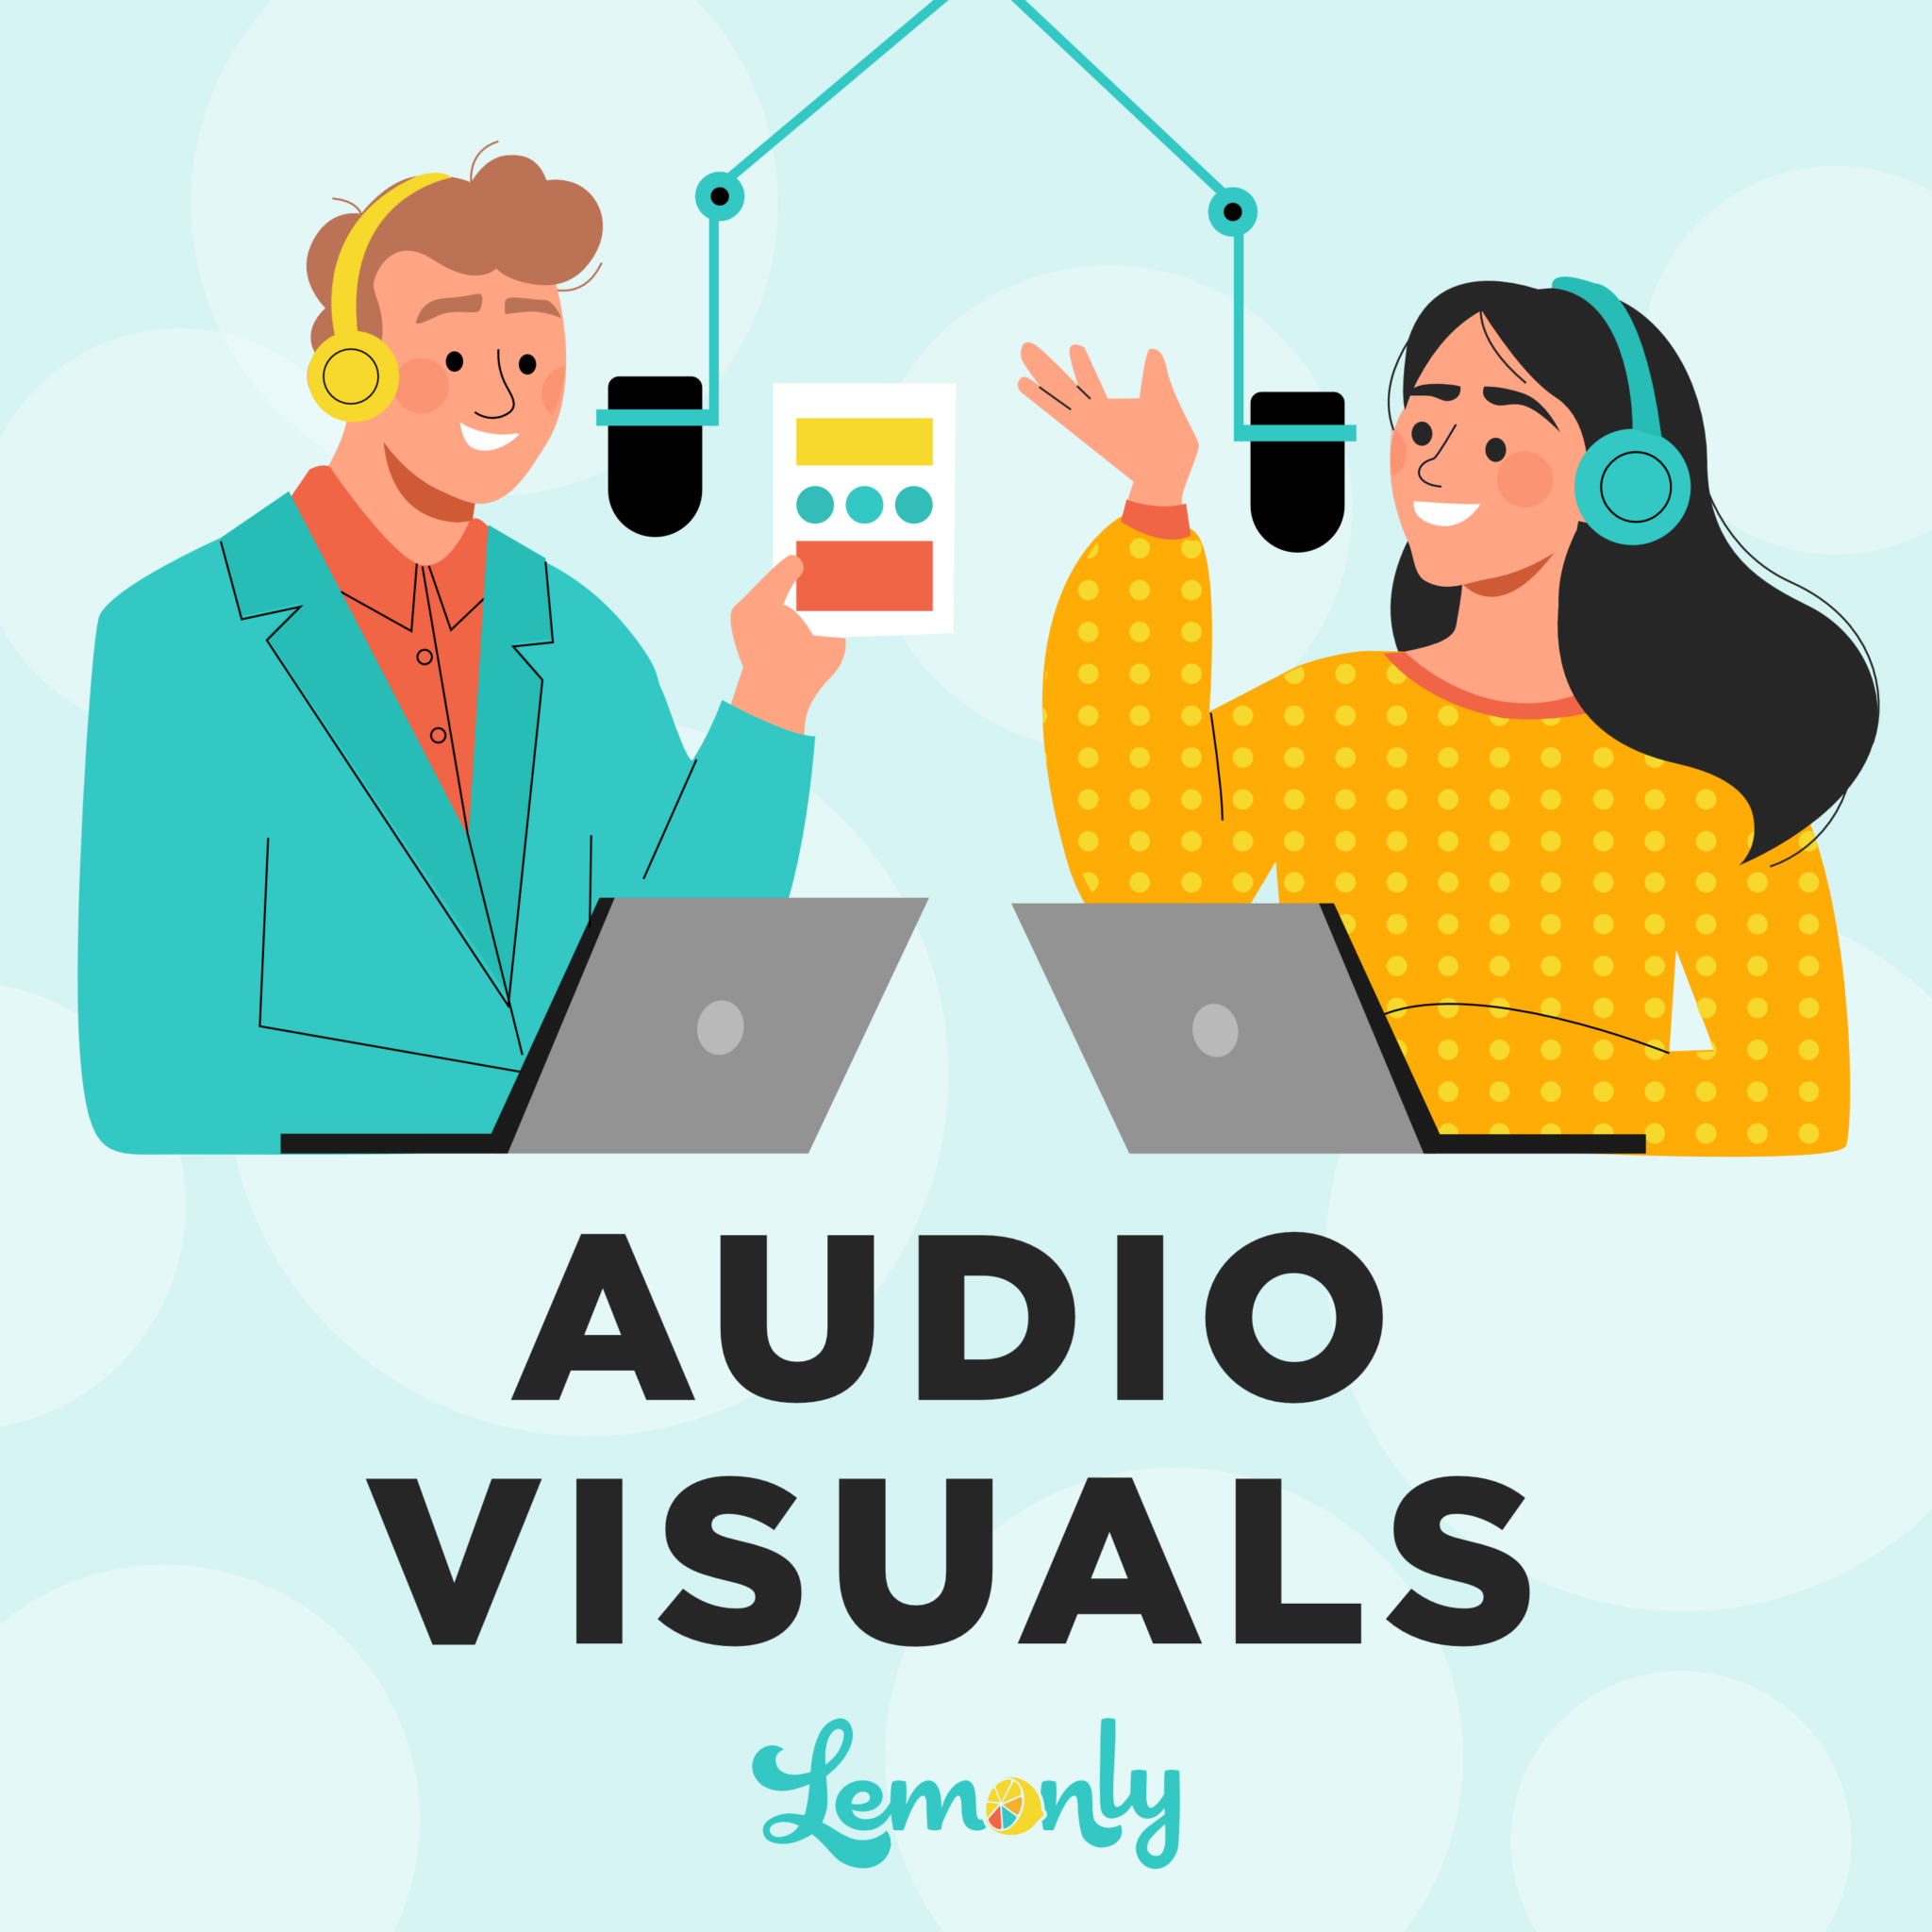 audio visual presentation definition